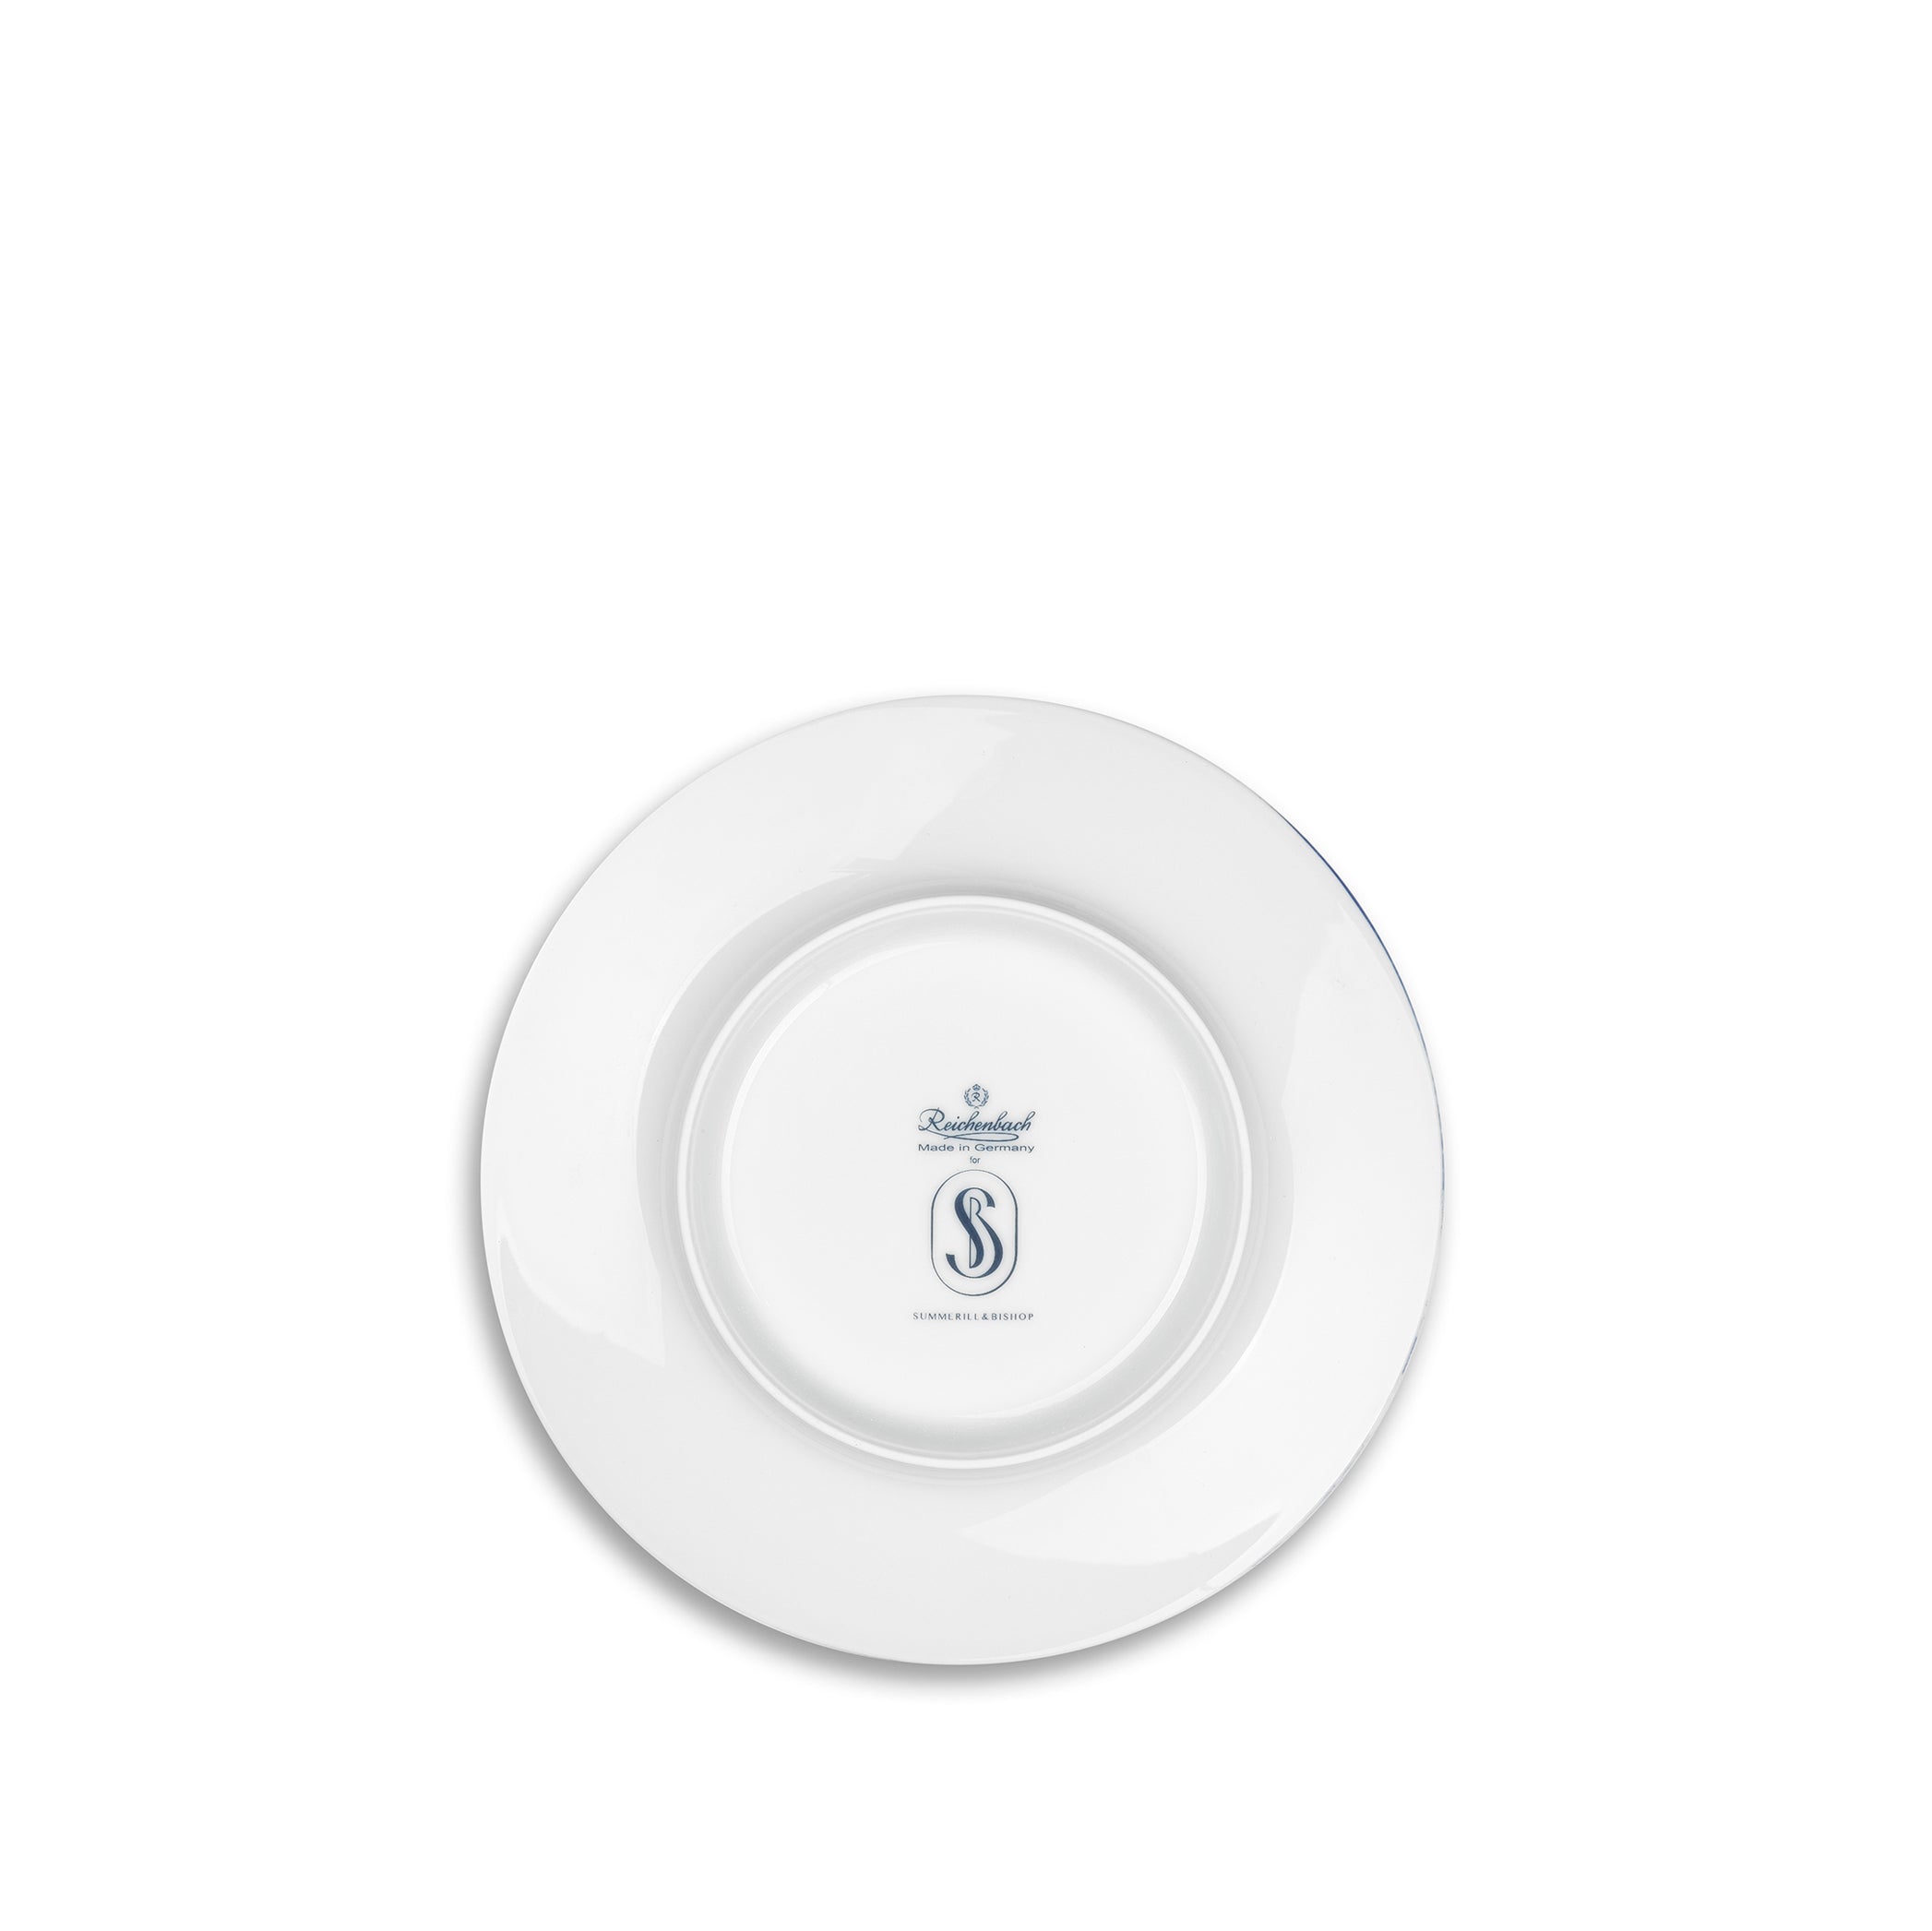 S&B 16cm Porcelain Dessert Plate with Blue Edge